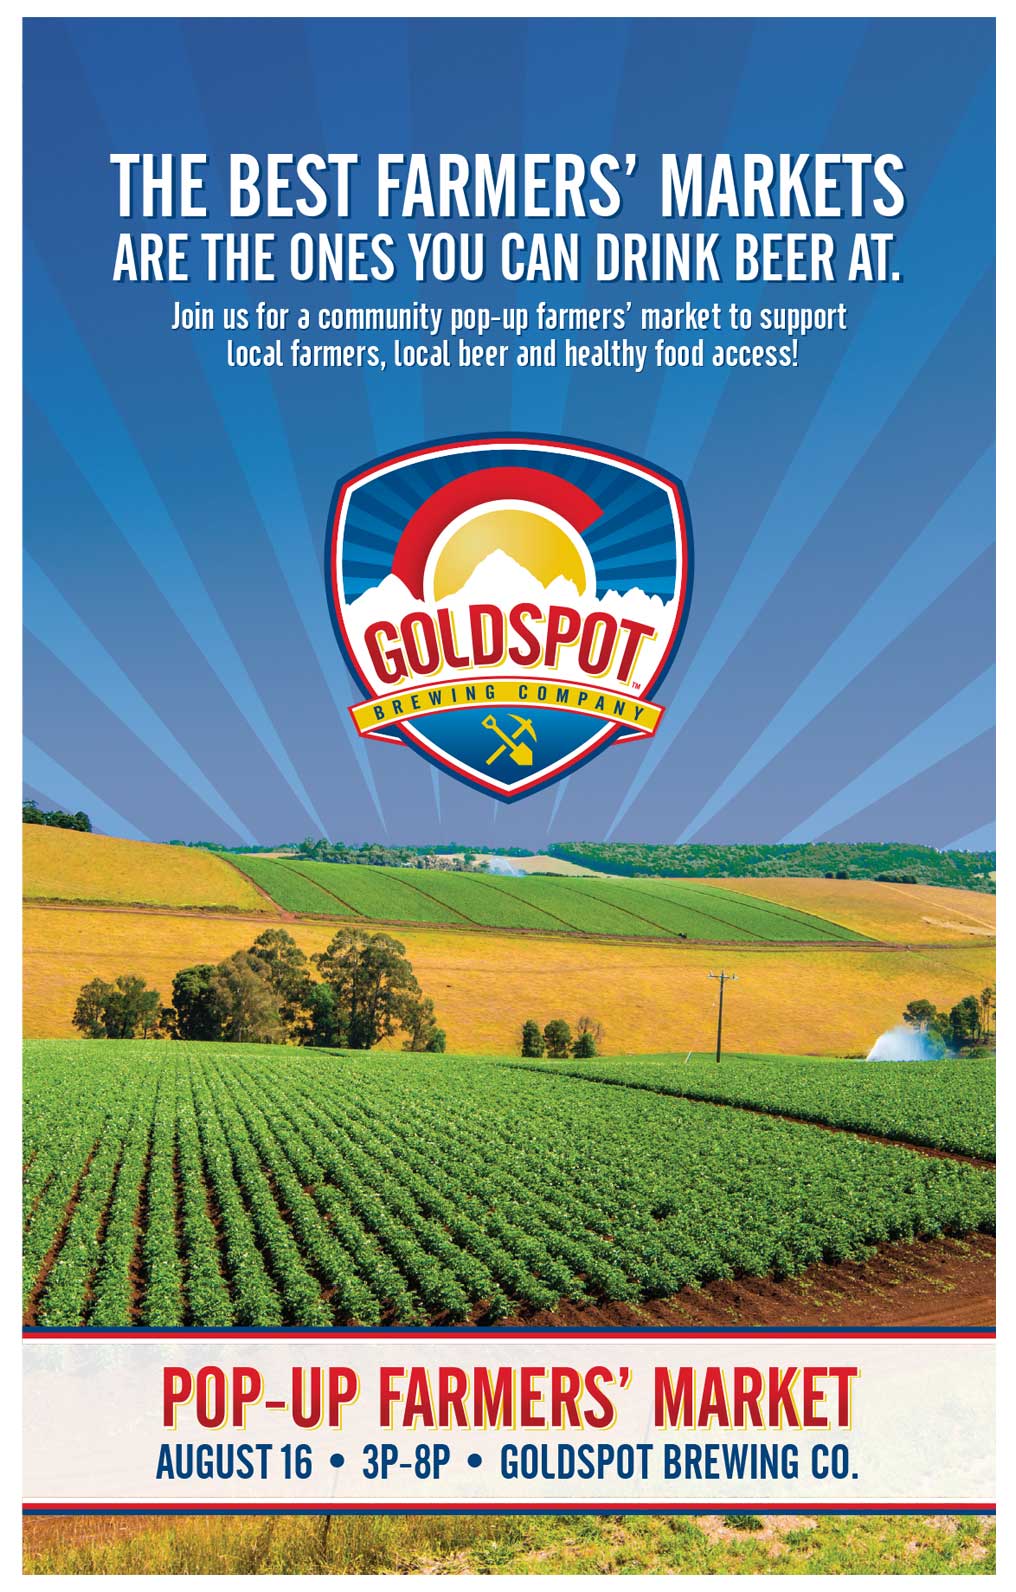 Goldspot-Brewing-Farmers-Market-Poster-Mobile